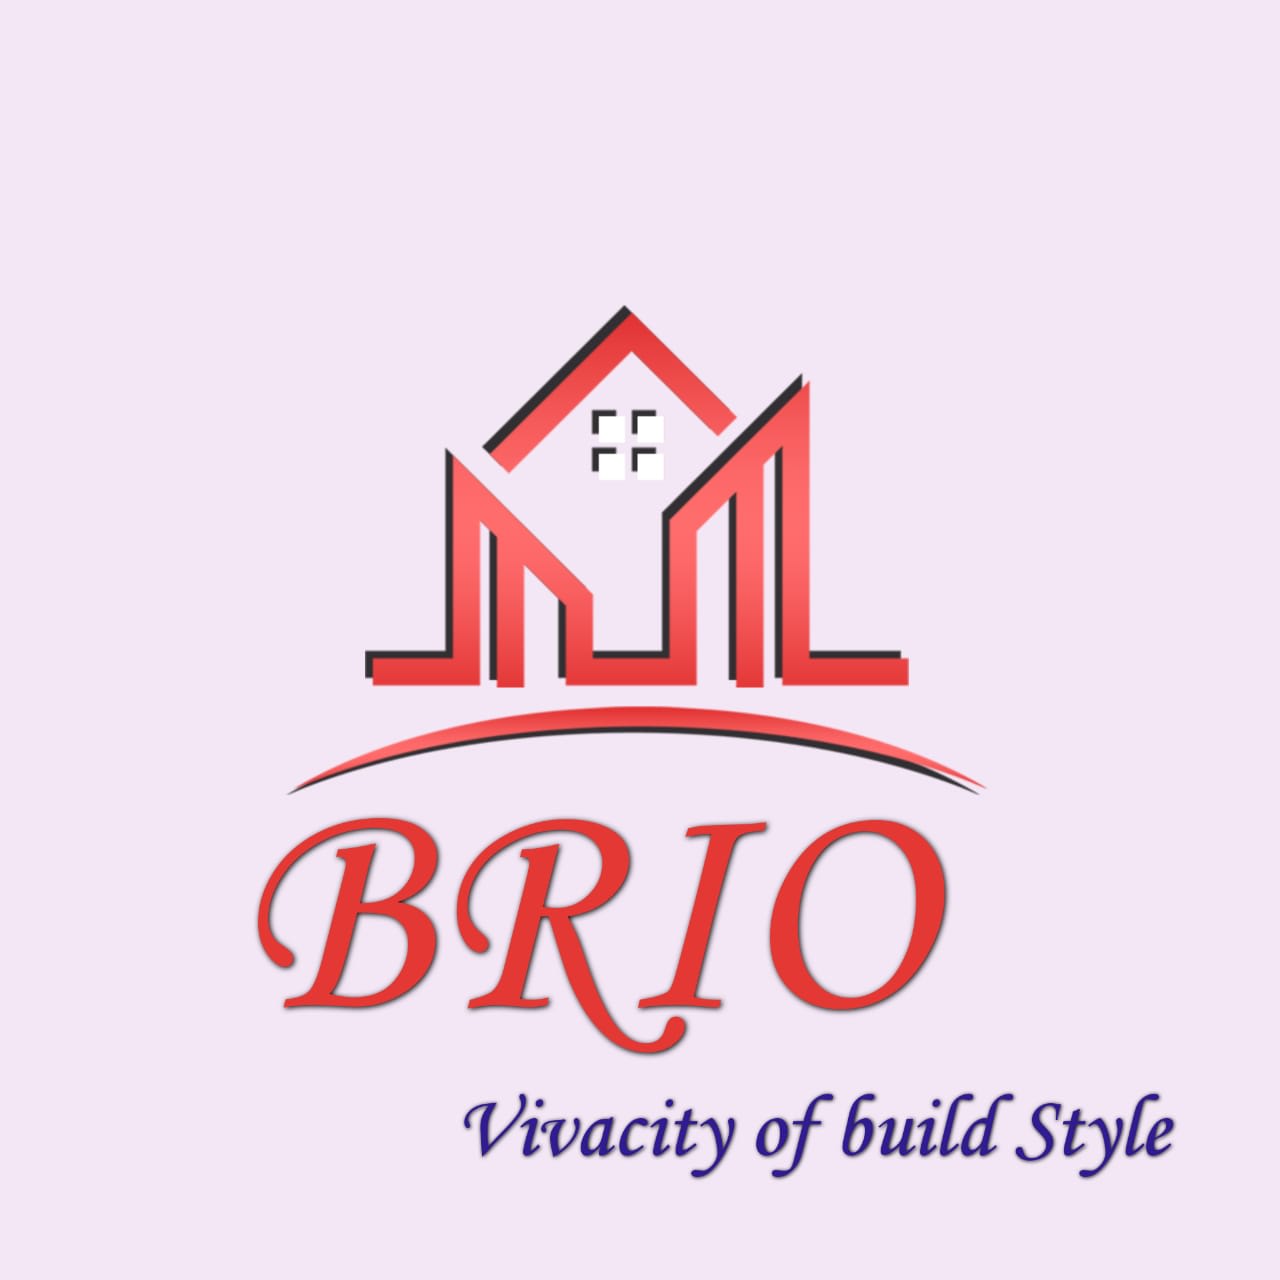 Brio Group of companies